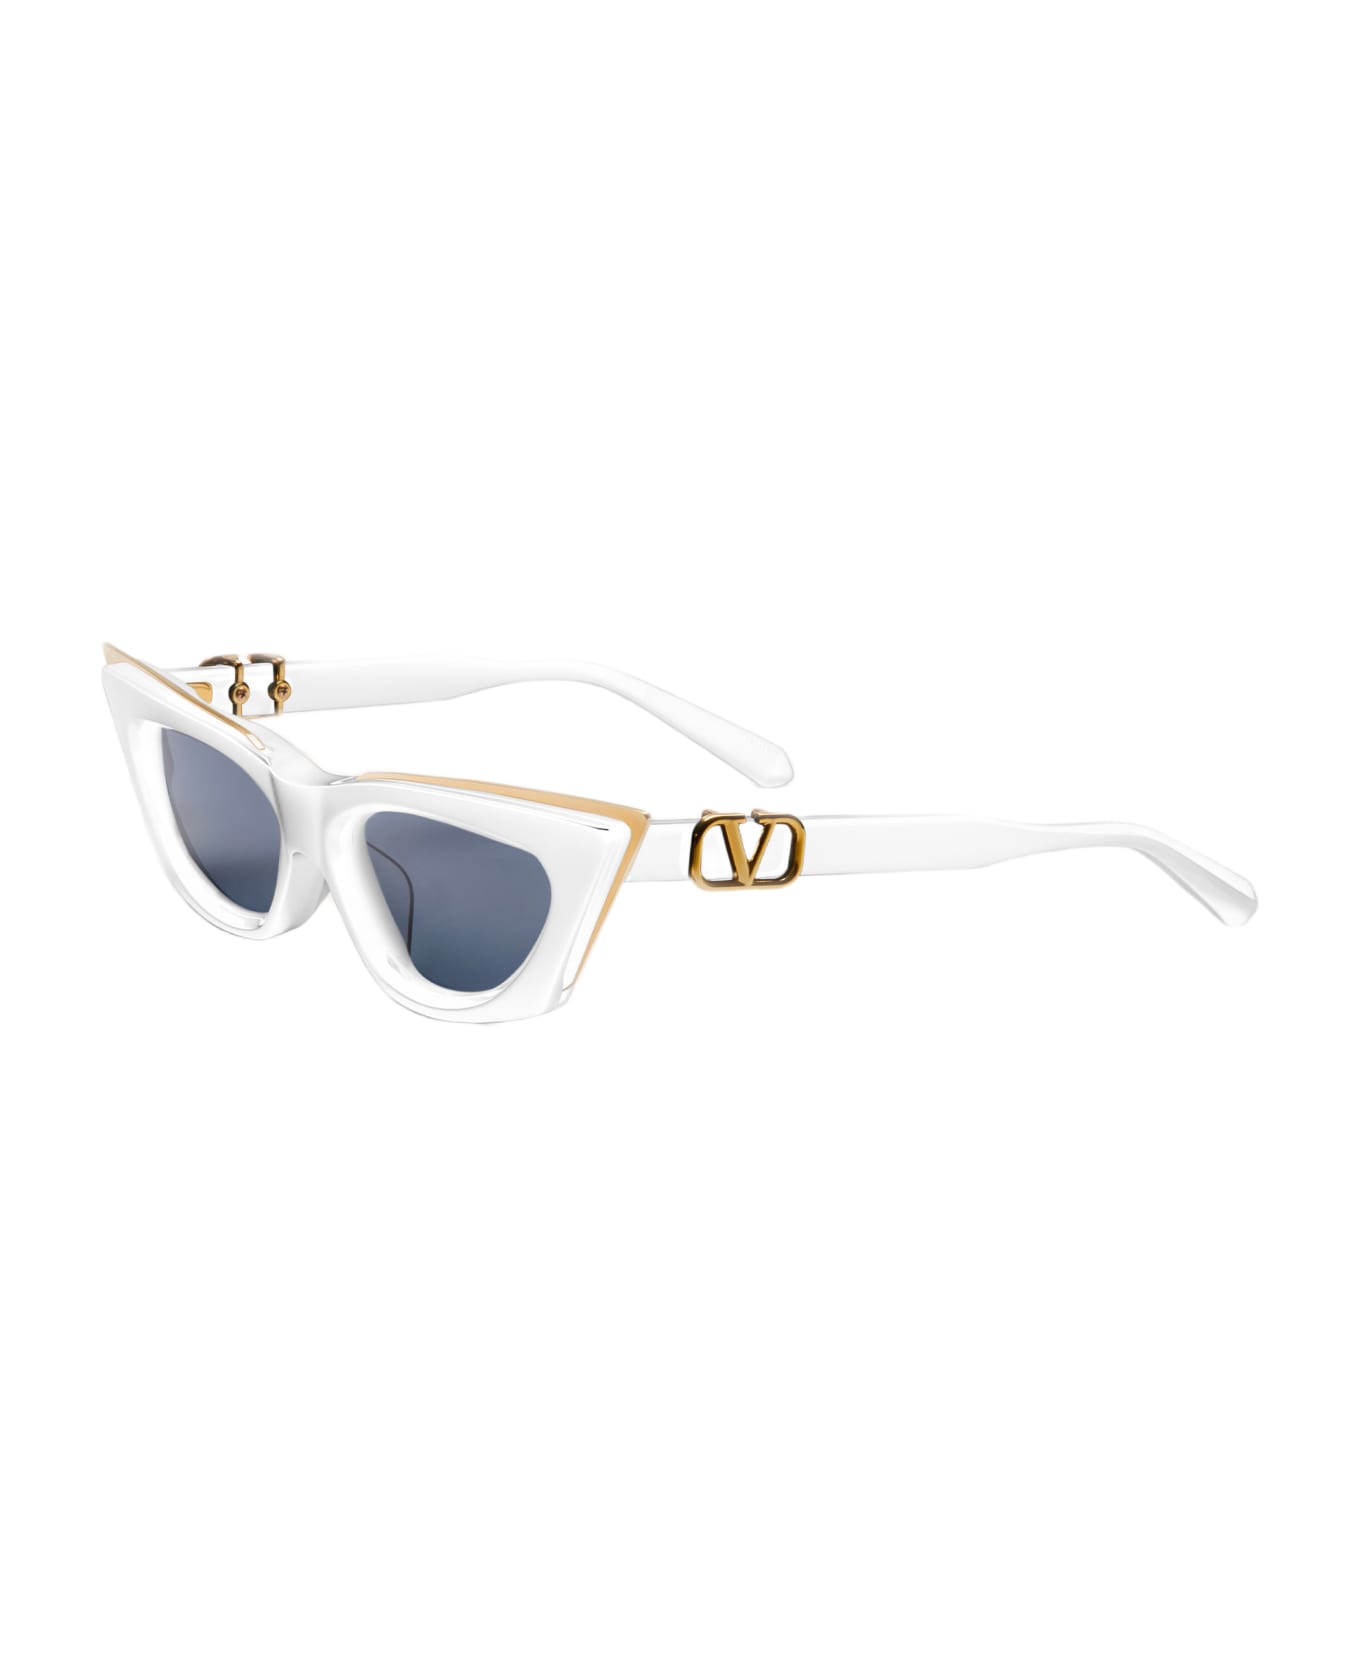 Valentino Eyewear V-goldcut I - White / Yellow Gold Sunglasses - white/gold サングラス